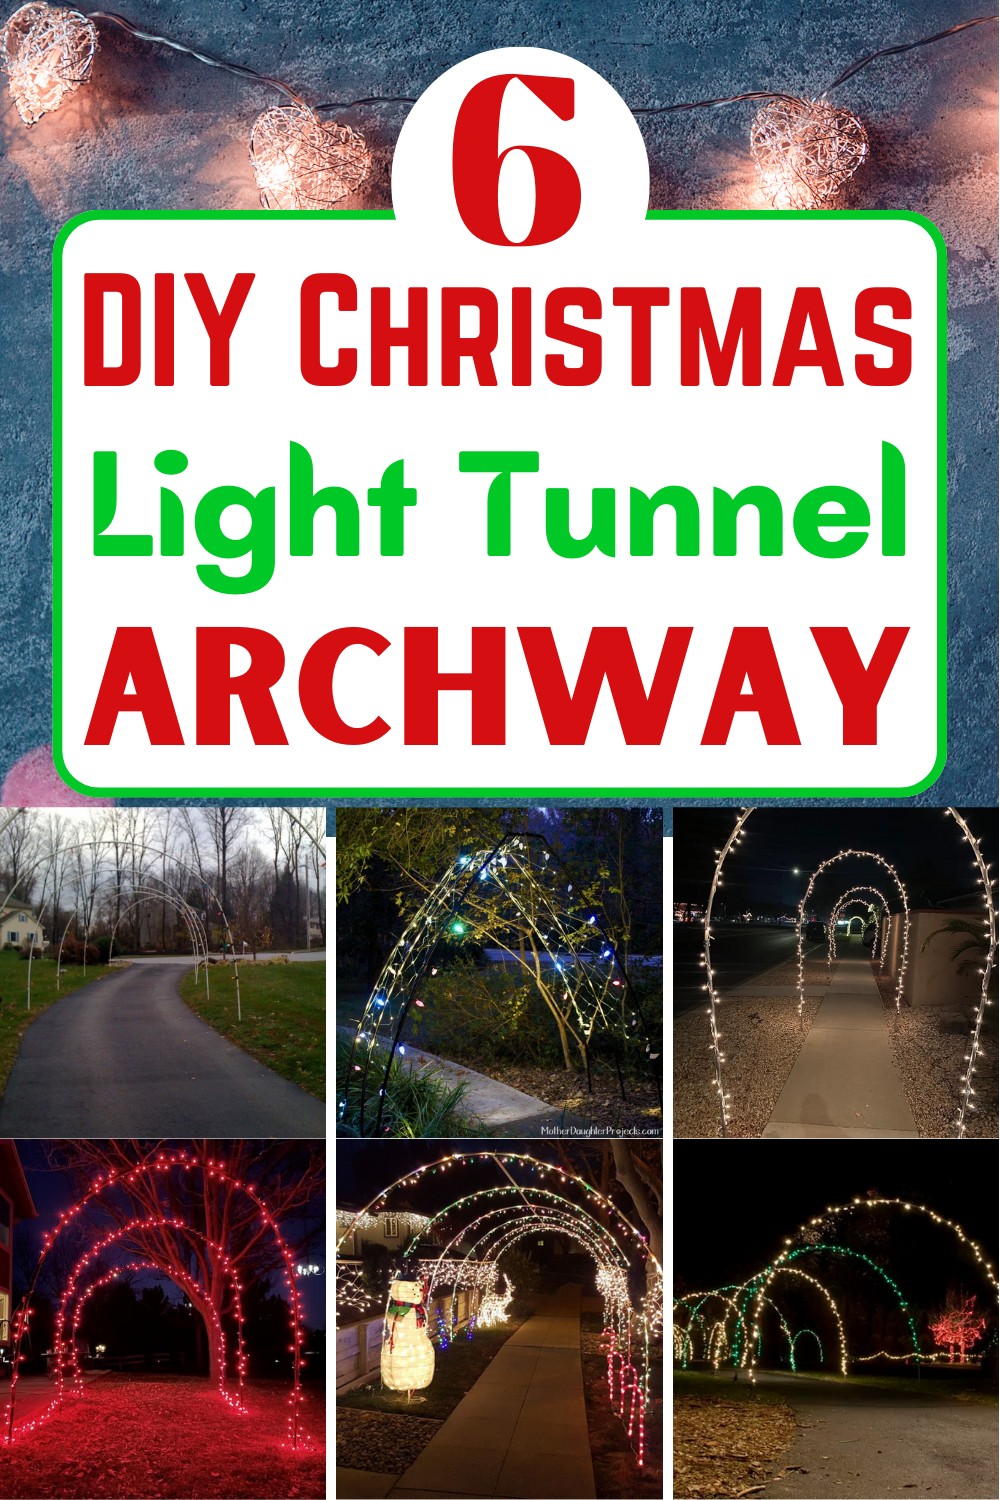 6 DIY Christmas Light Tunnel Archway Plans